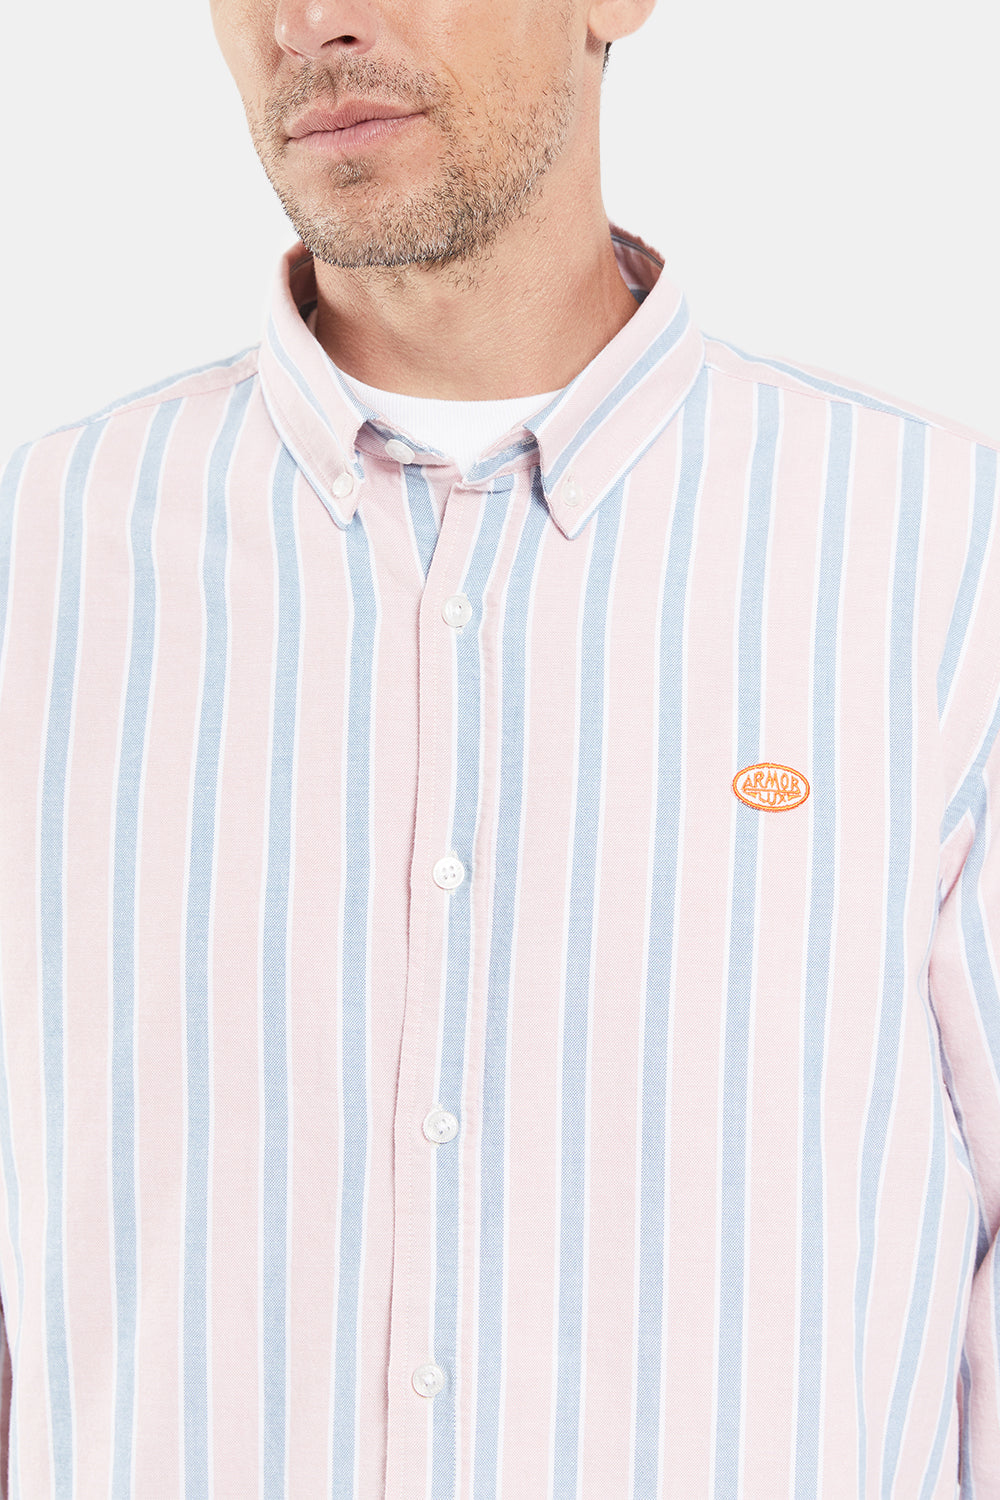 Armor Lux Oxford Stripe Henley Shirt (Pink White Blue)